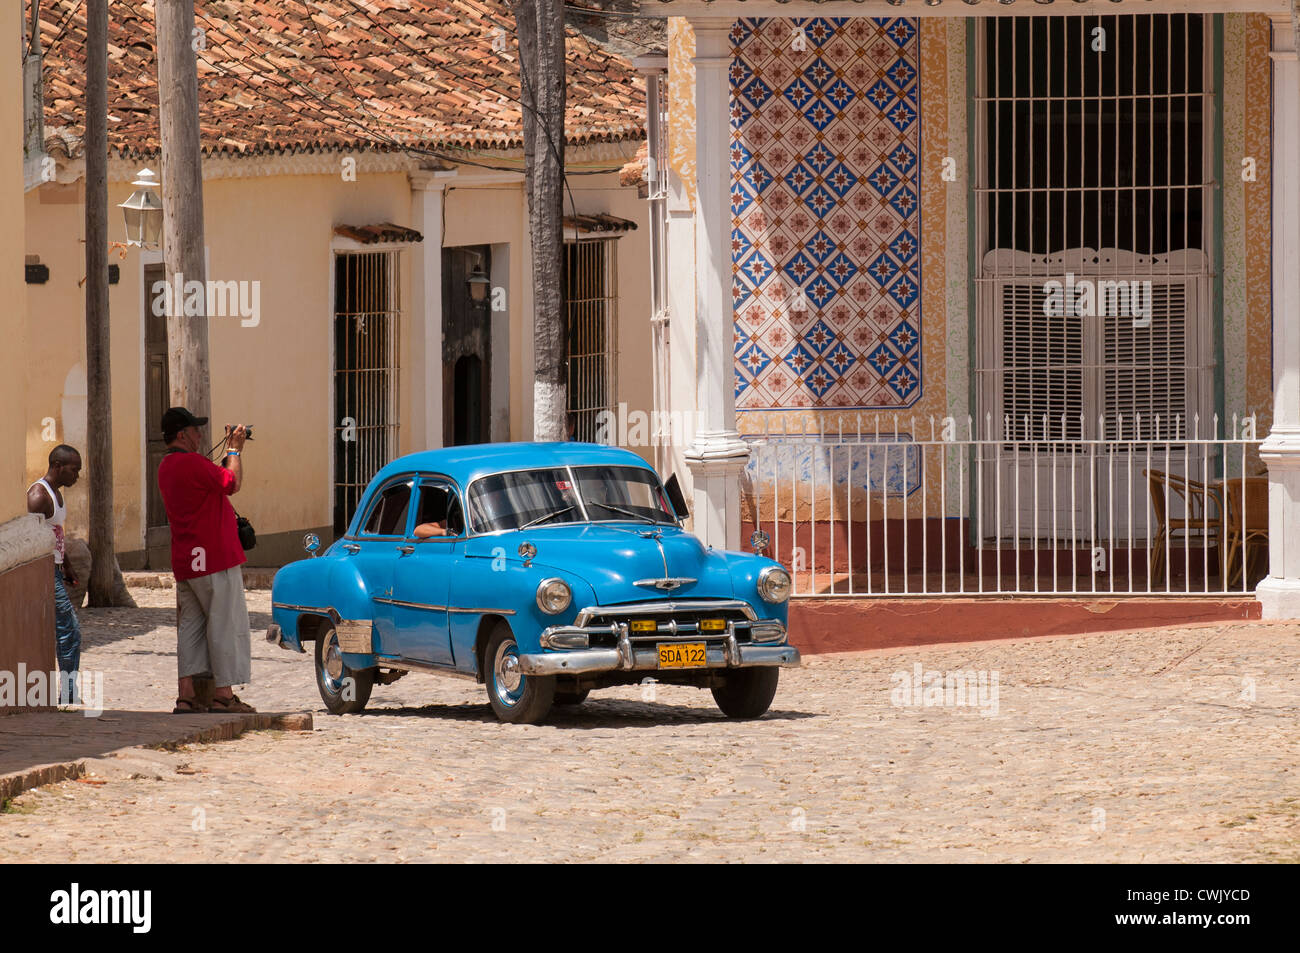 Antique 1950s Chevy car Trinidad, UNESCO World Heritage Site, Cuba. Stock Photo